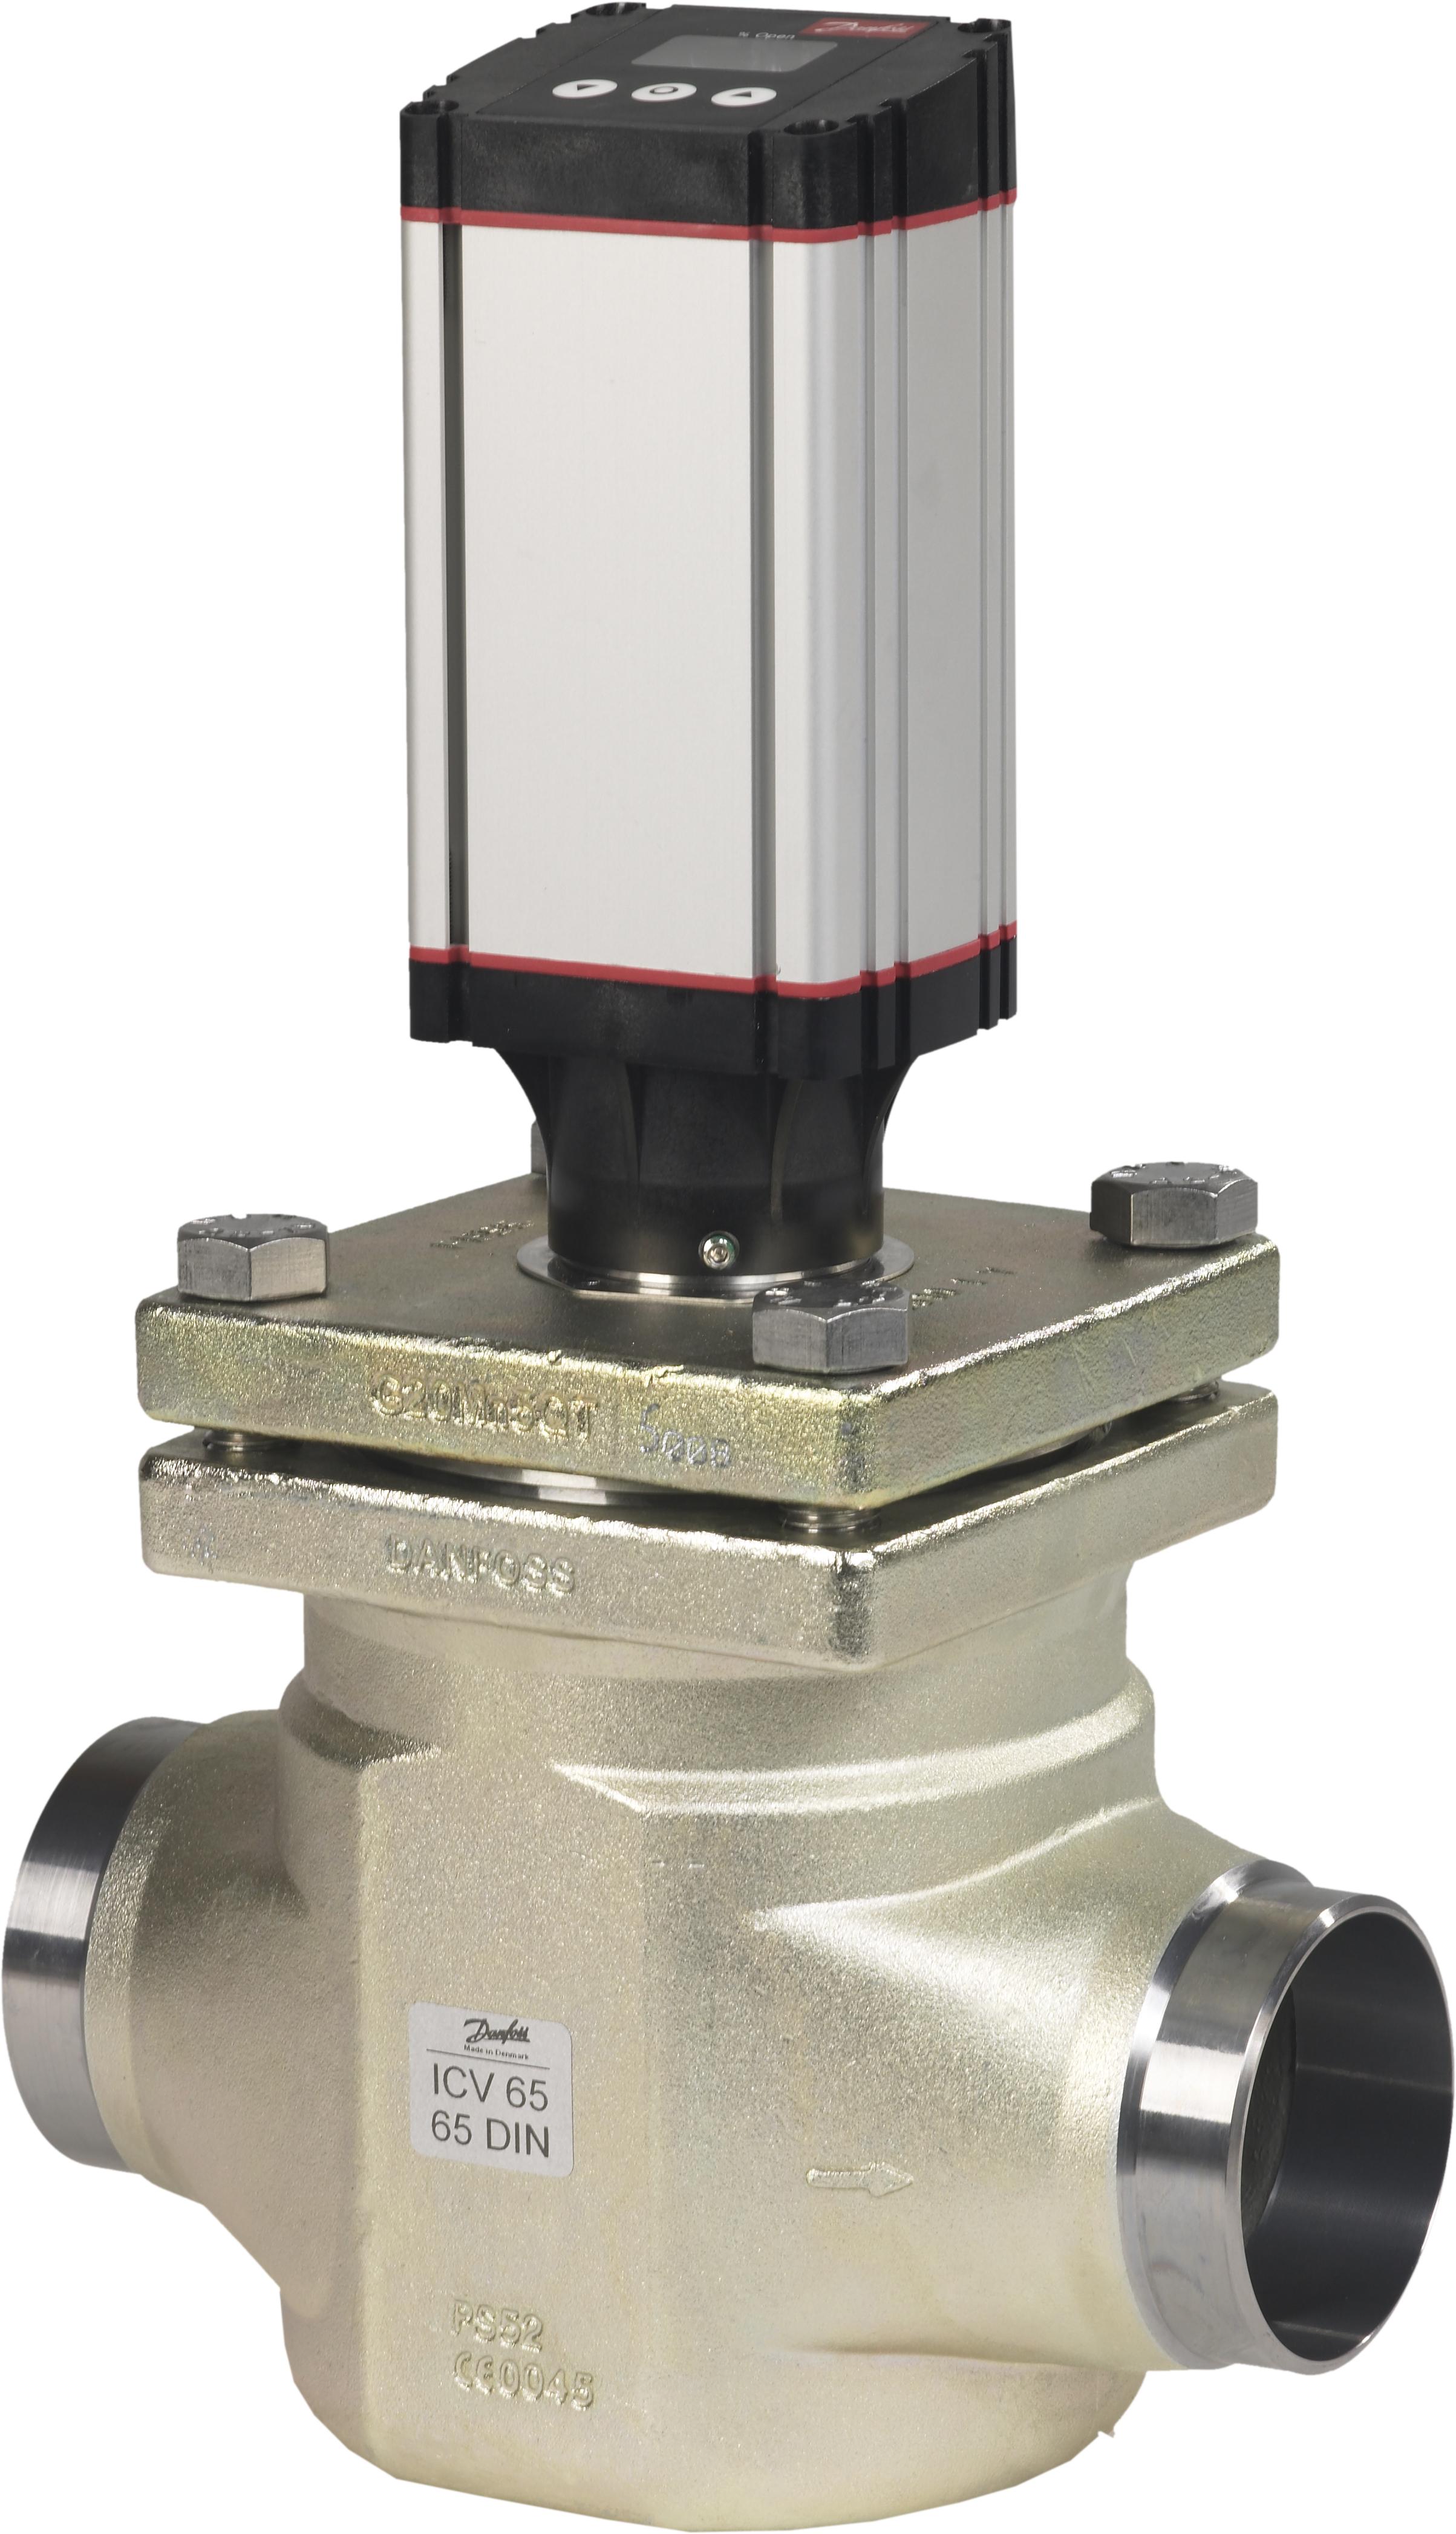 Motor operated valve, ICM 65-A, Steel